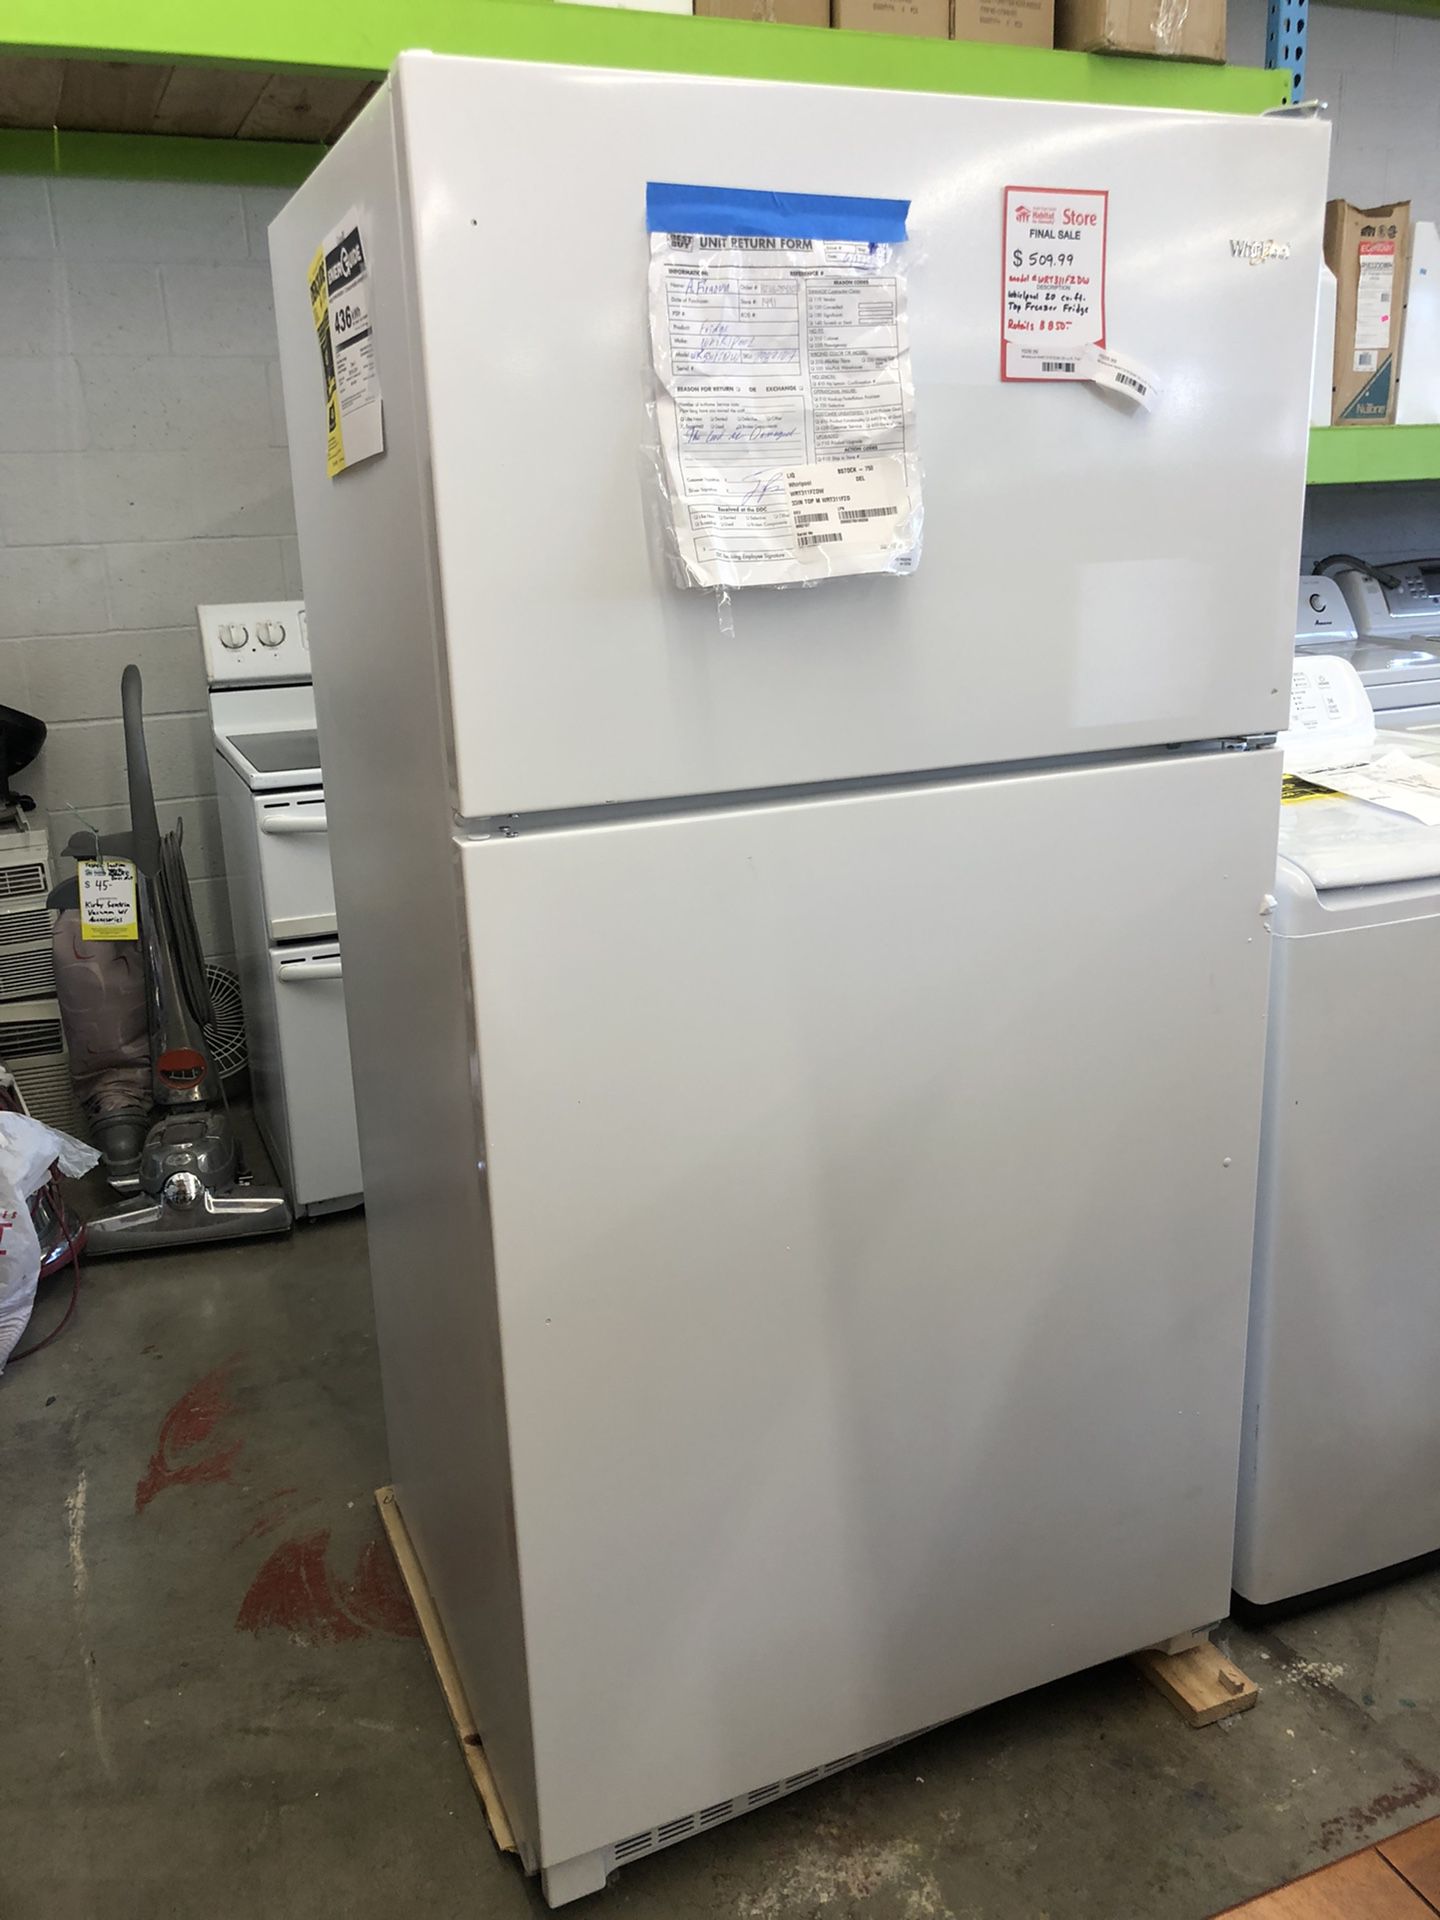 Whirlpool “New/Scratch And Dent Return” Refrigerator